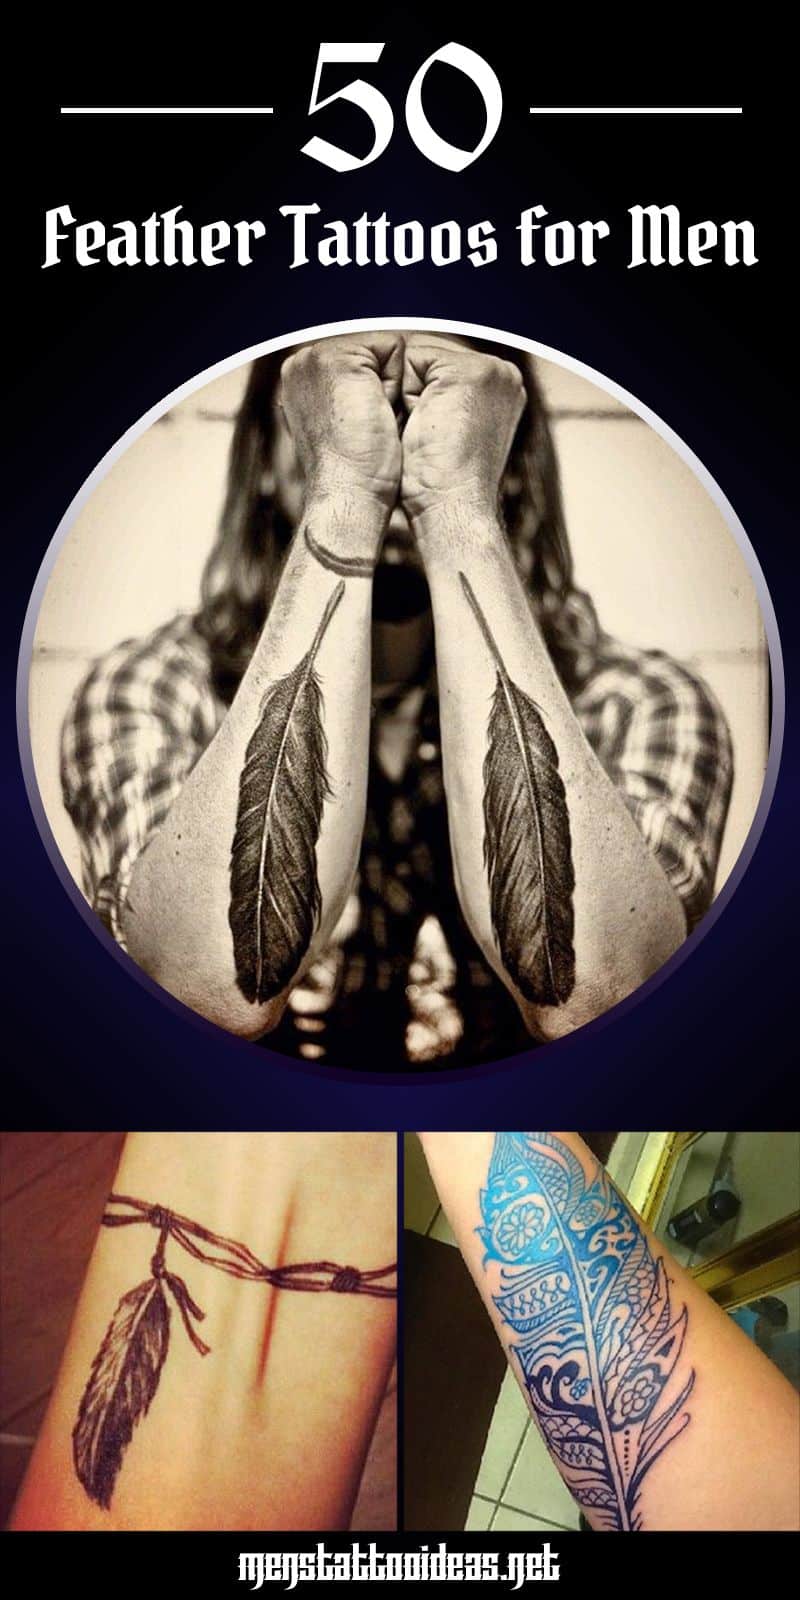 Feather tattoo ideas